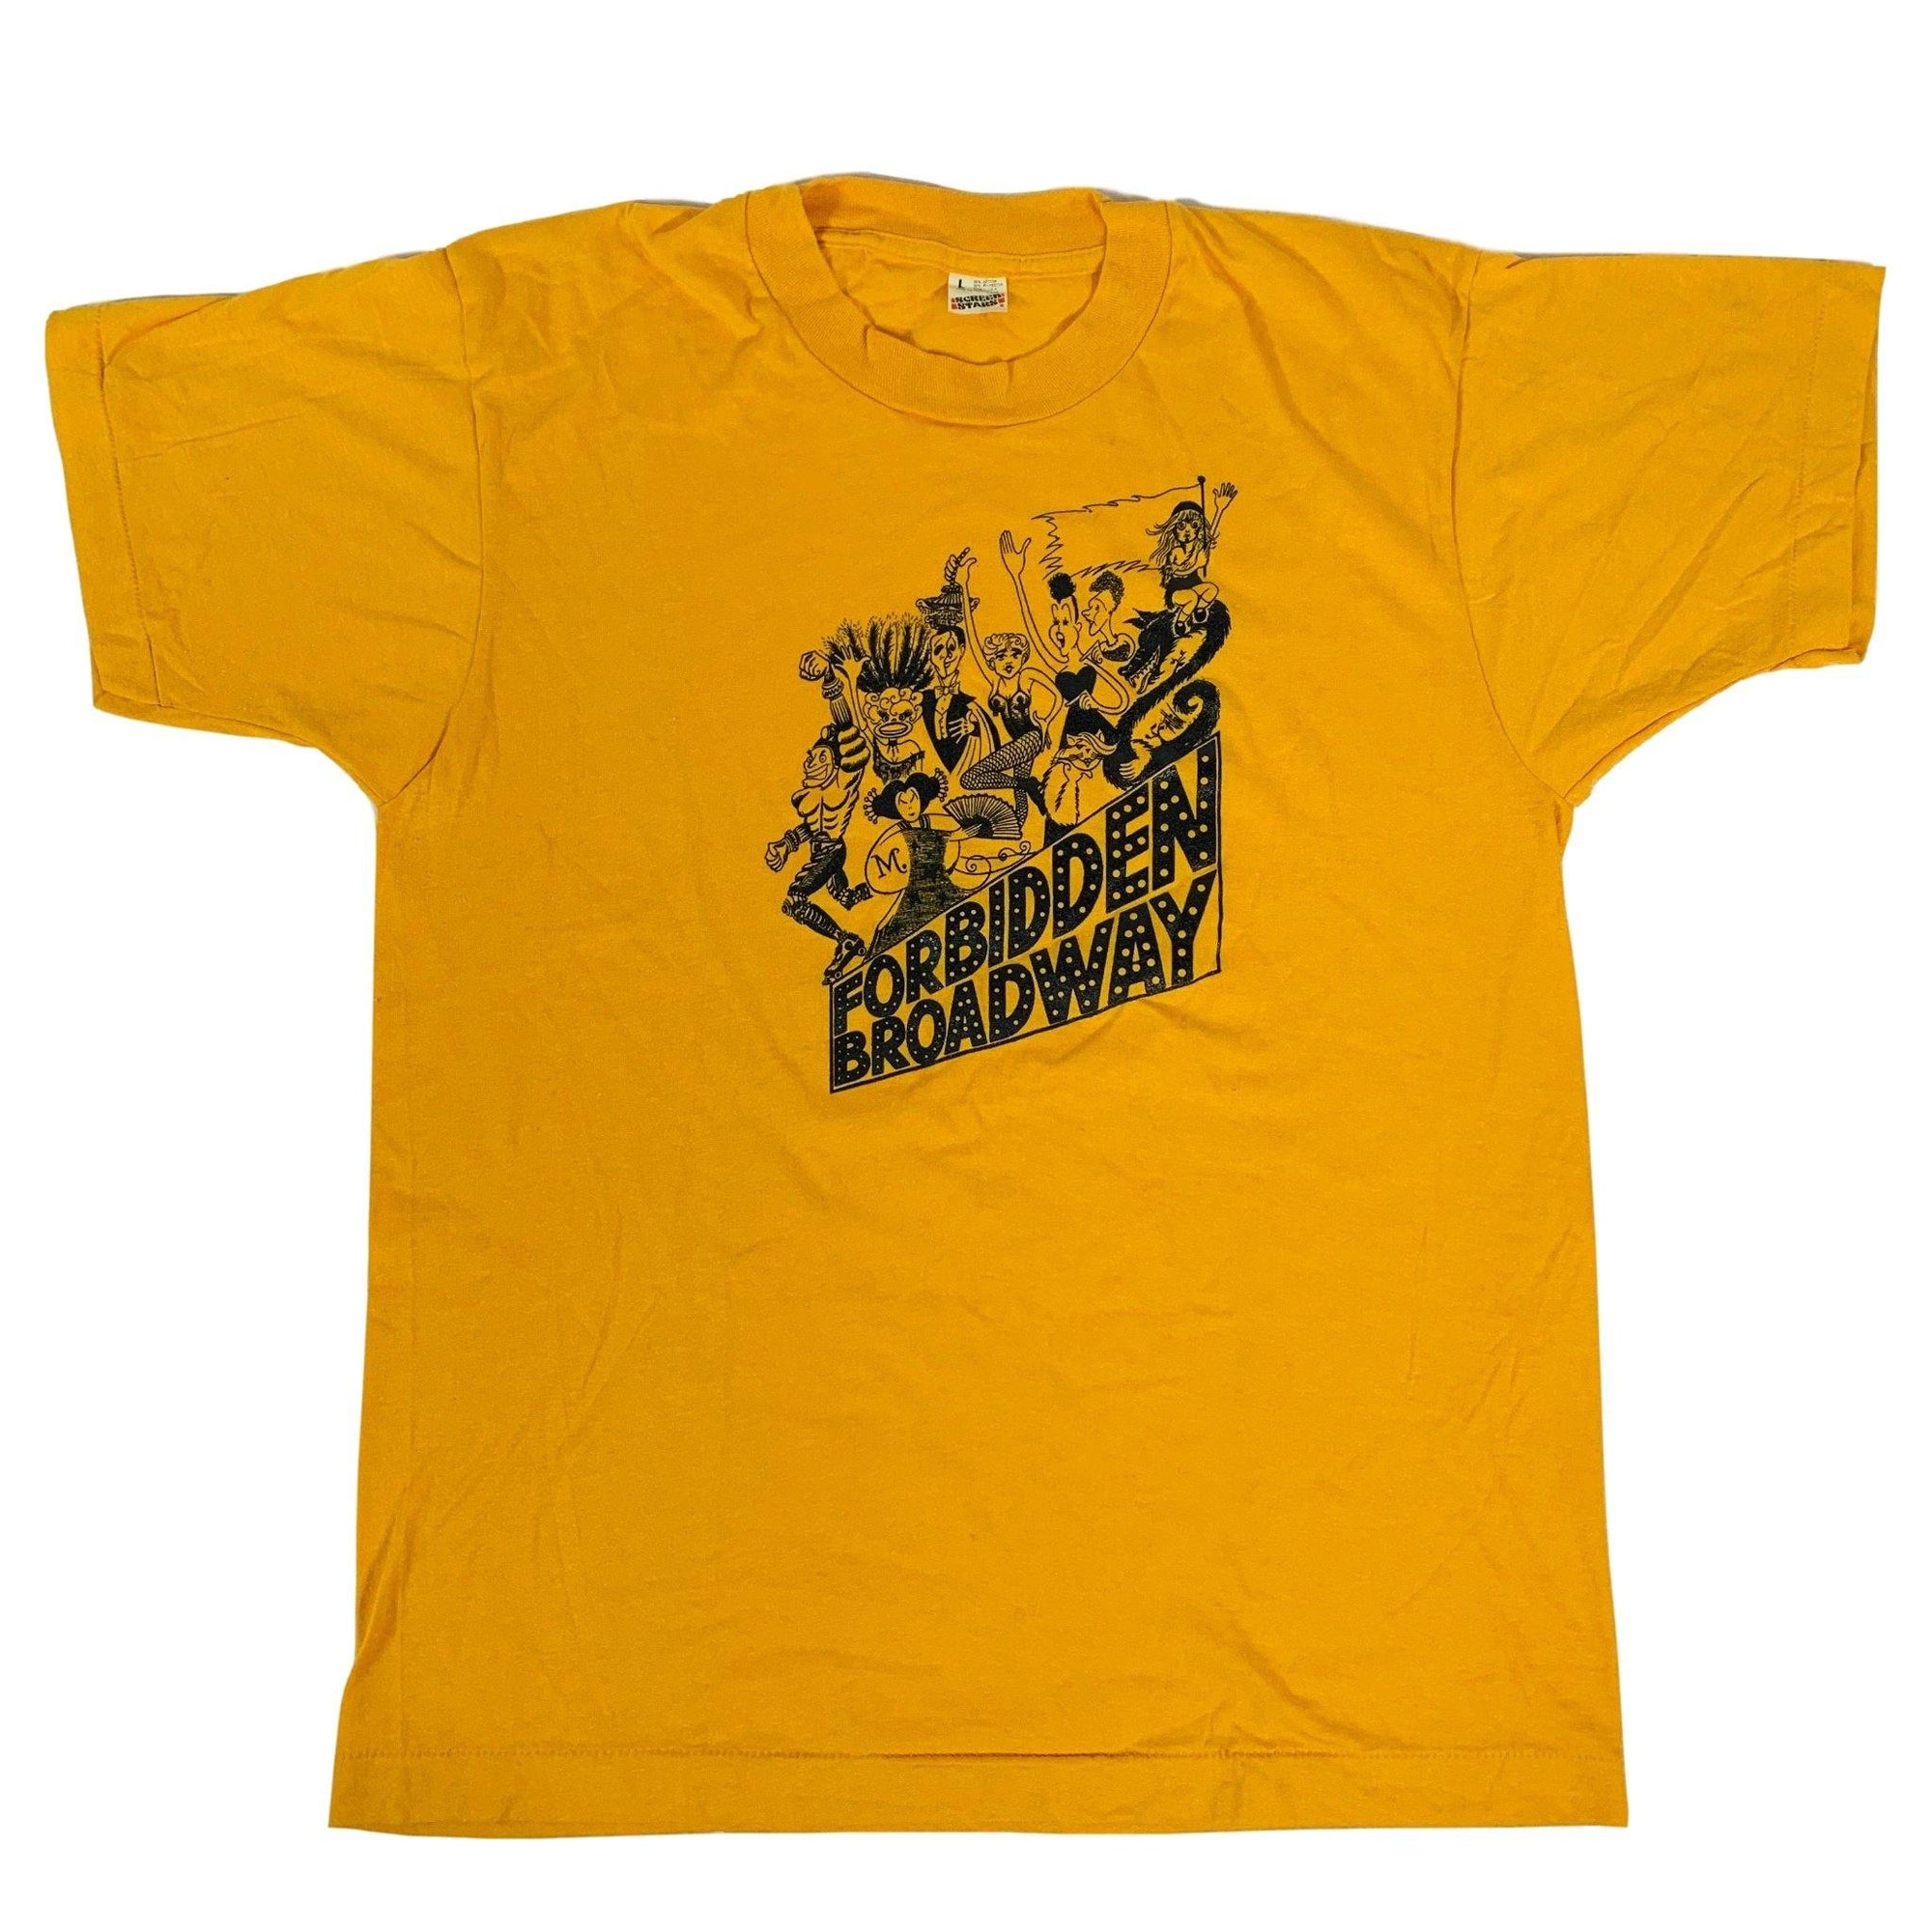 Vintage Forbidden Broadway "1982" T-Shirt - jointcustodydc